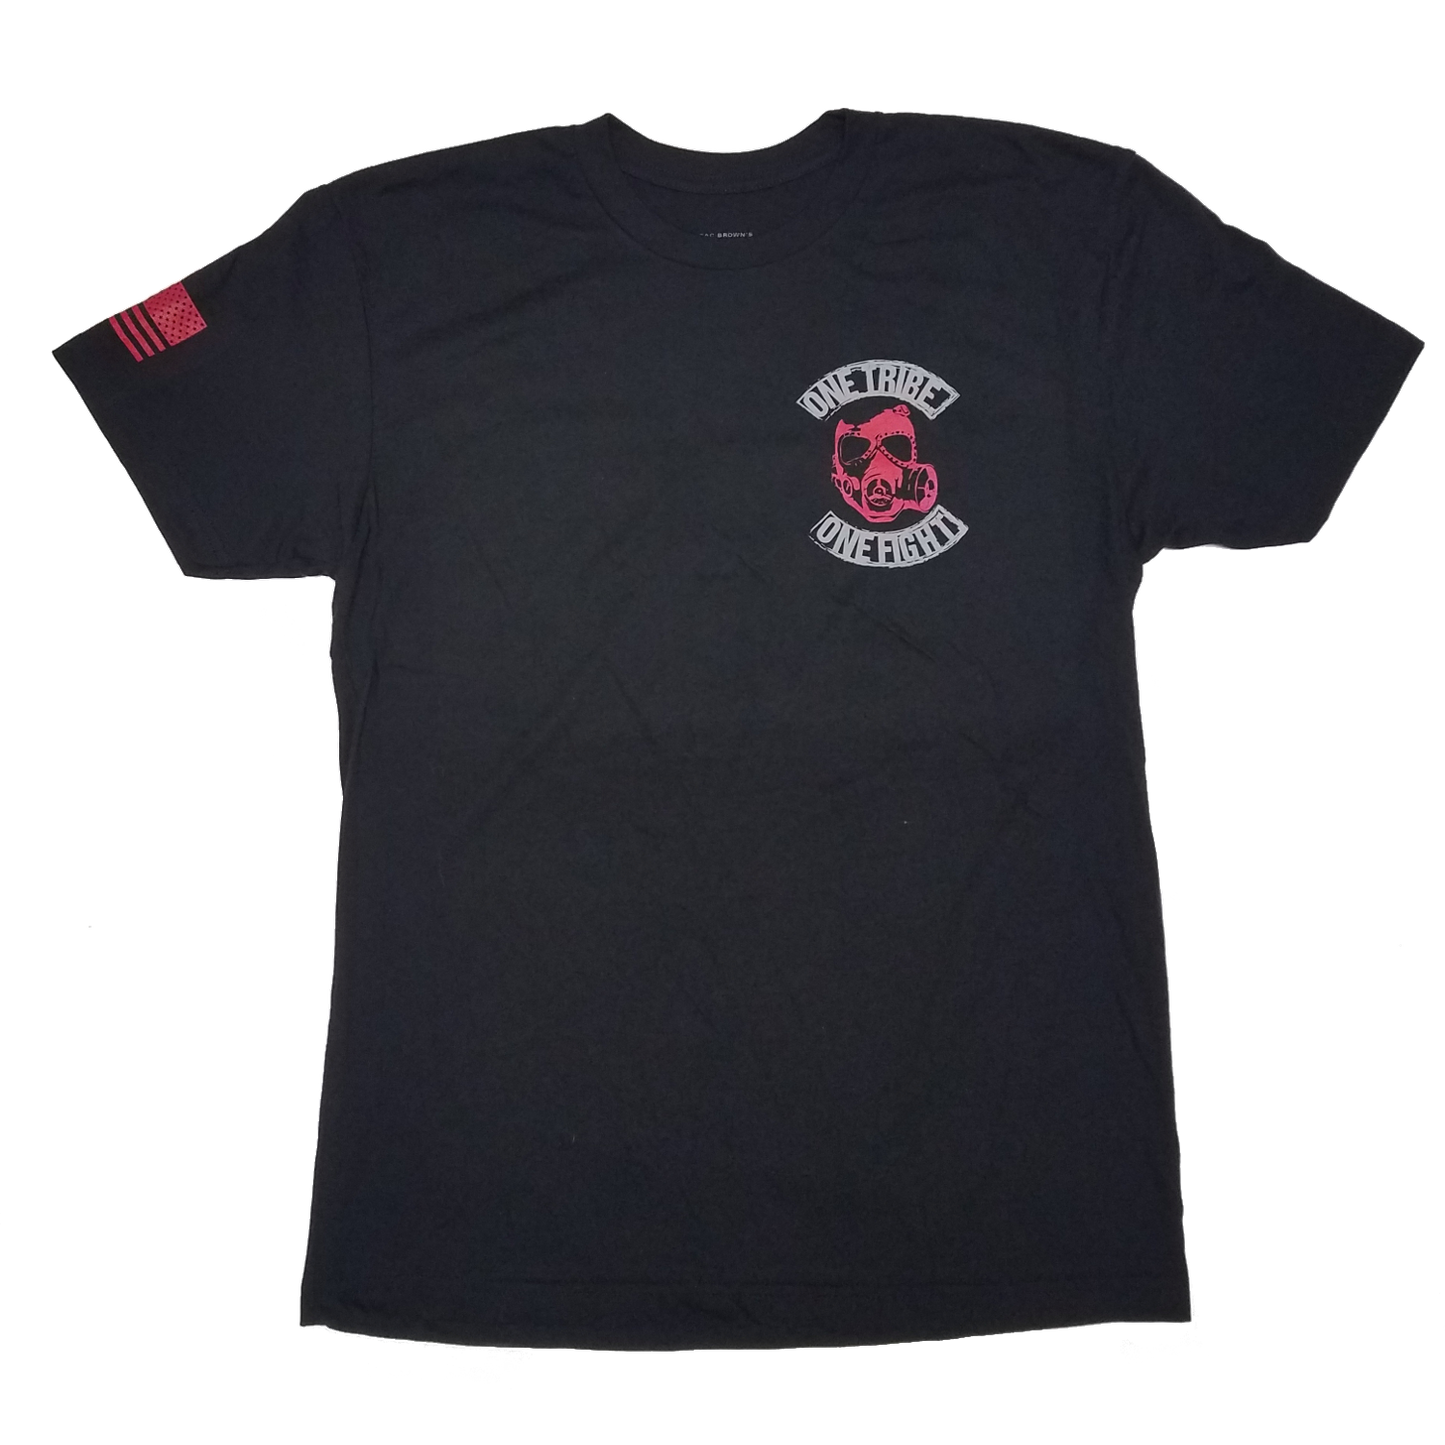 "OG" 22KILL t-shirt in black. One Tribe. One Fight. 